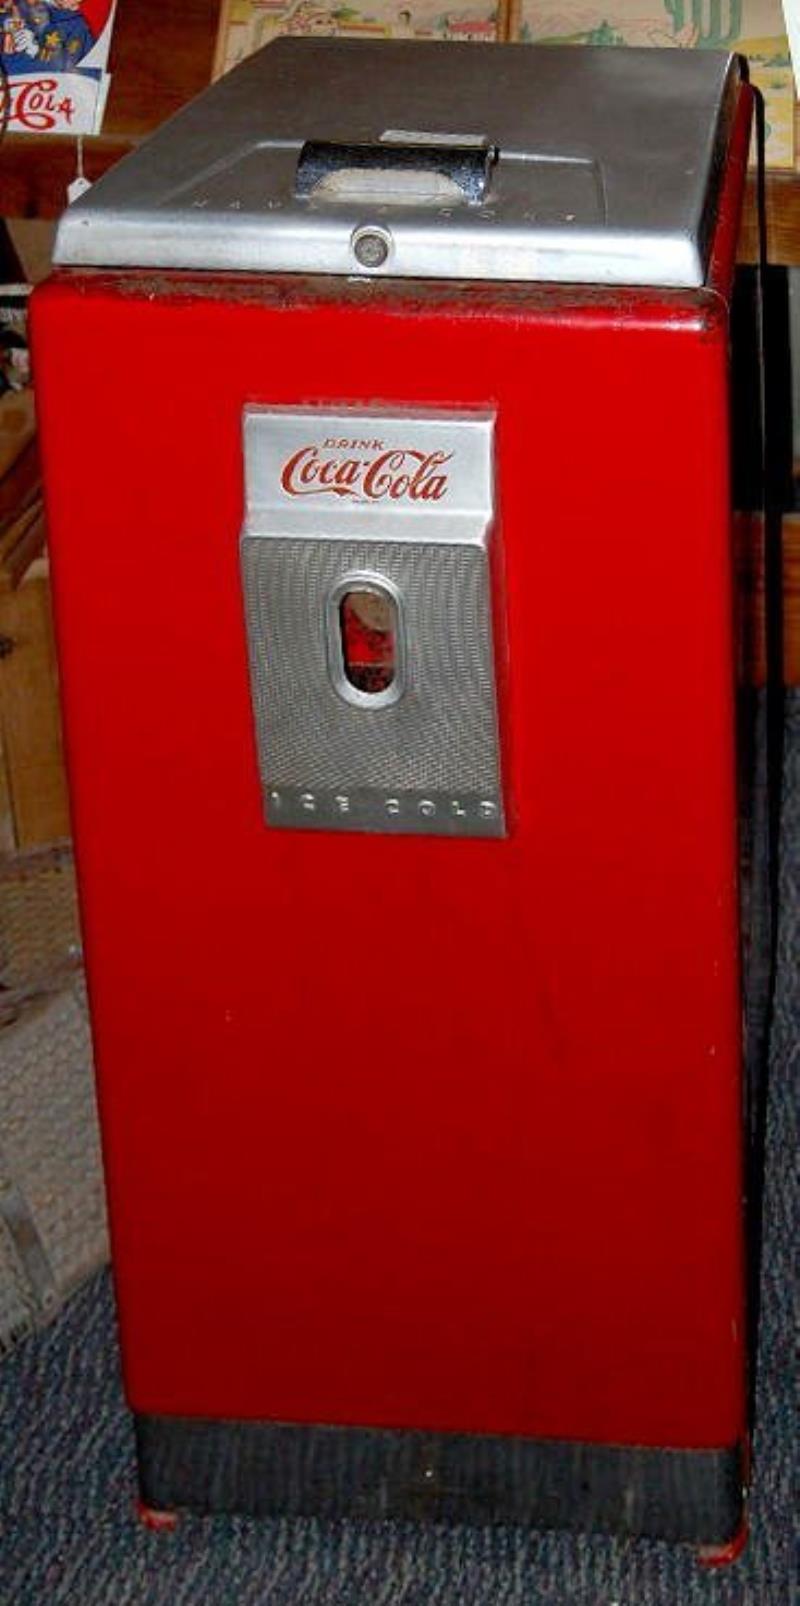 Cavalier Corporation Coca Cola Office Cooler